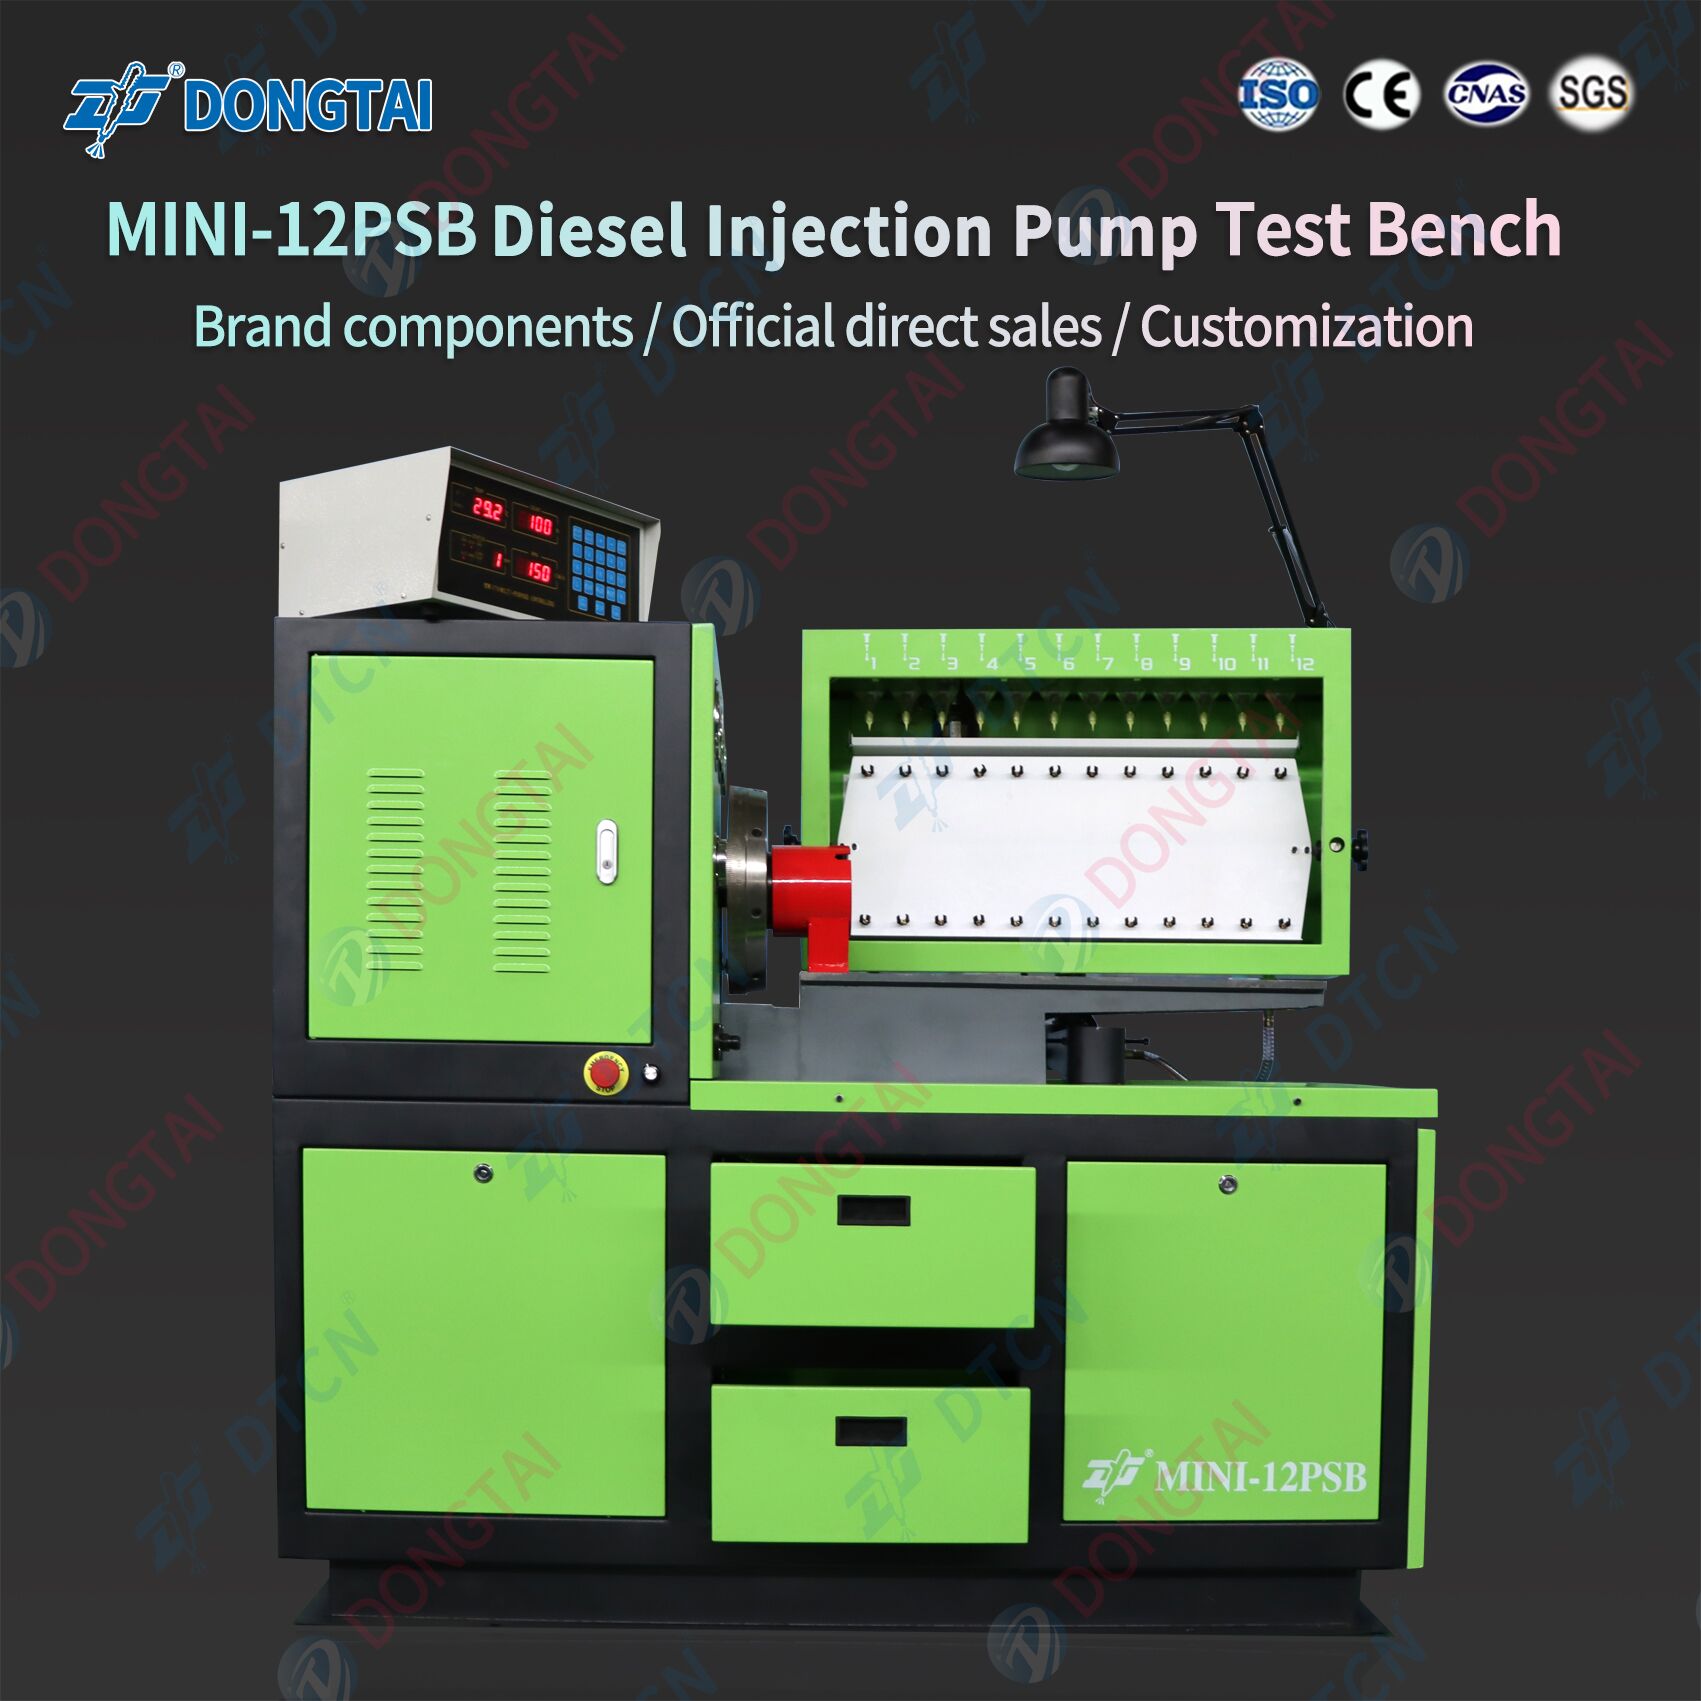 MINI-12PSB diesel injection pump test bench